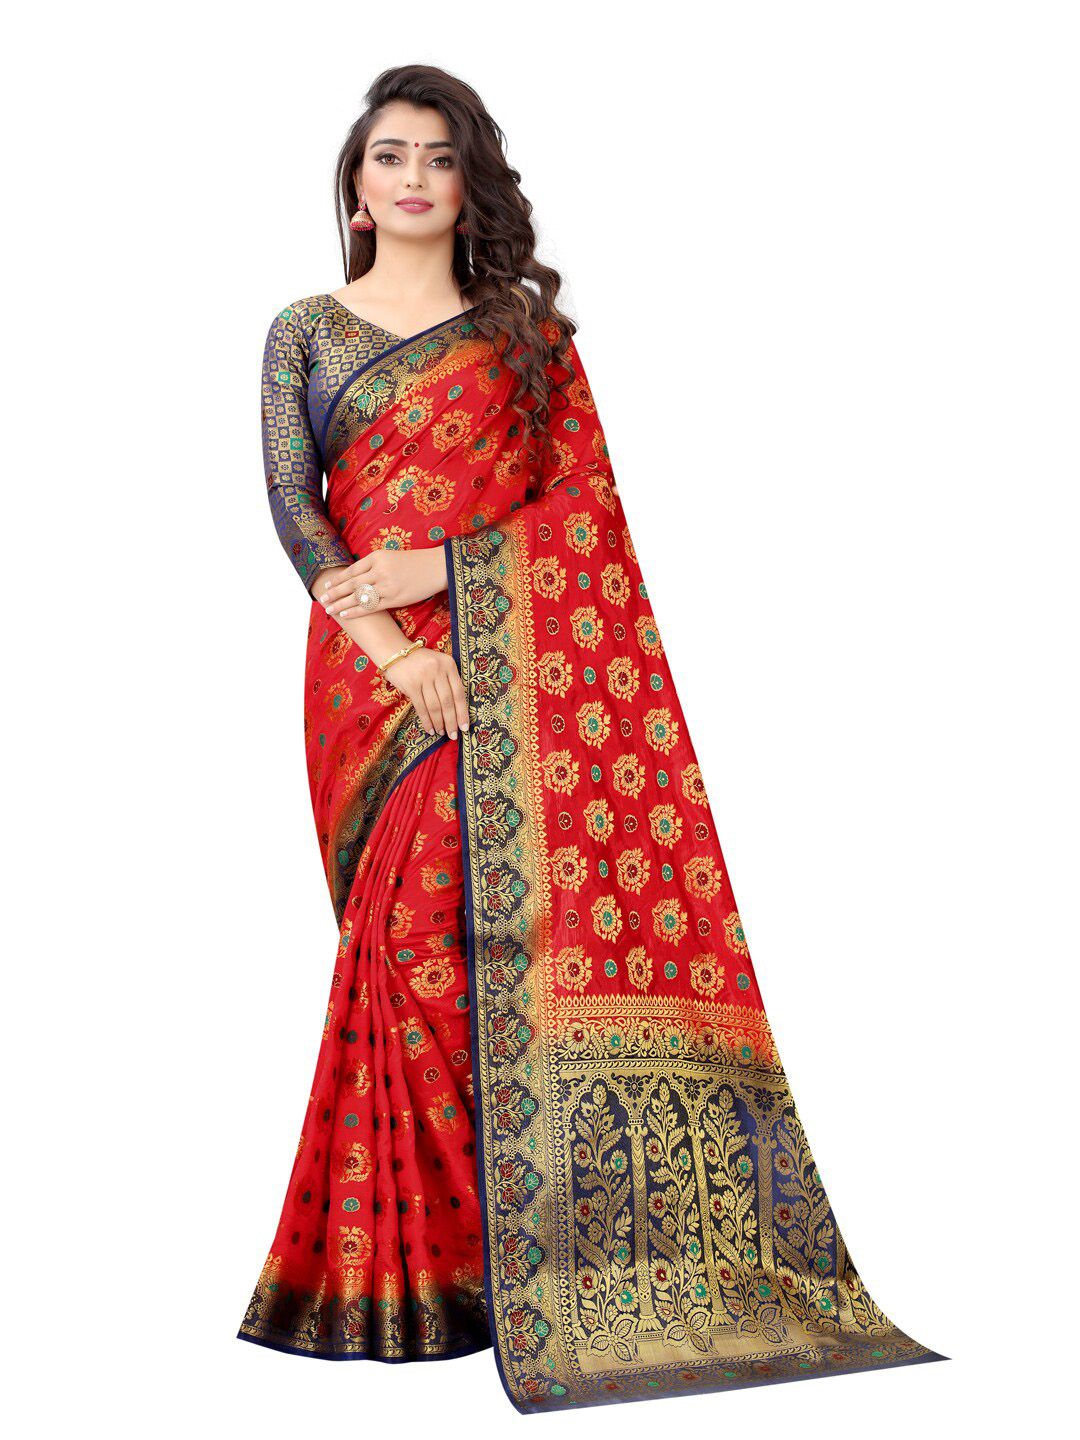 PERFECT WEAR Red & Golden Ethnic Motifs Zari Silk Cotton Banarasi Saree Price in India